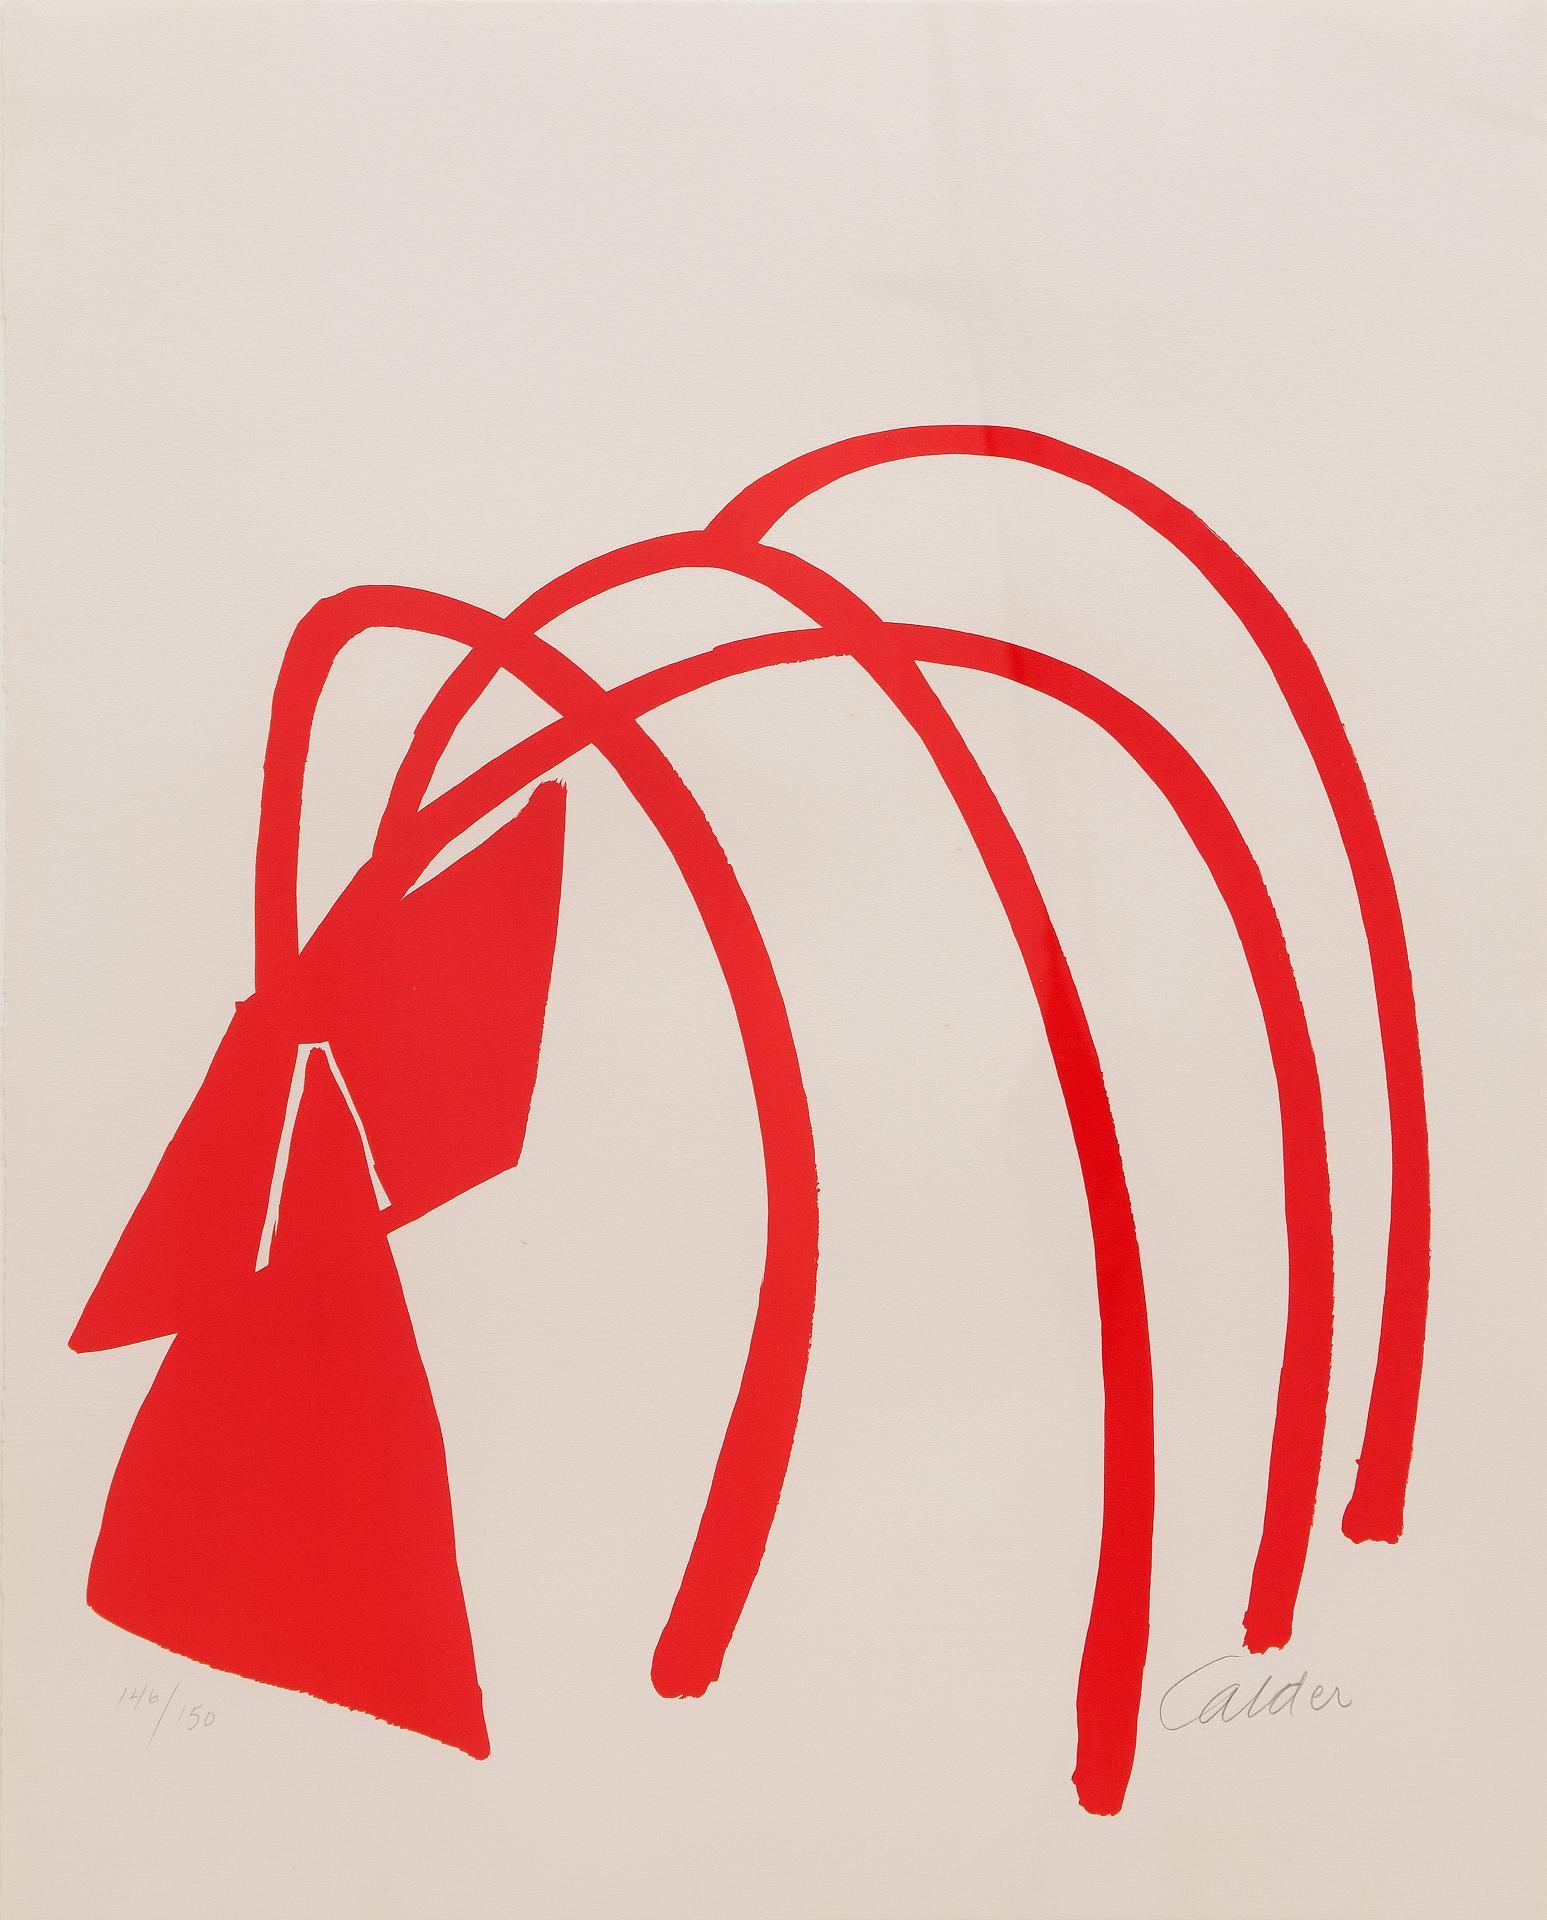 Alexander Calder (1898-1976) - Four Arches, 1974